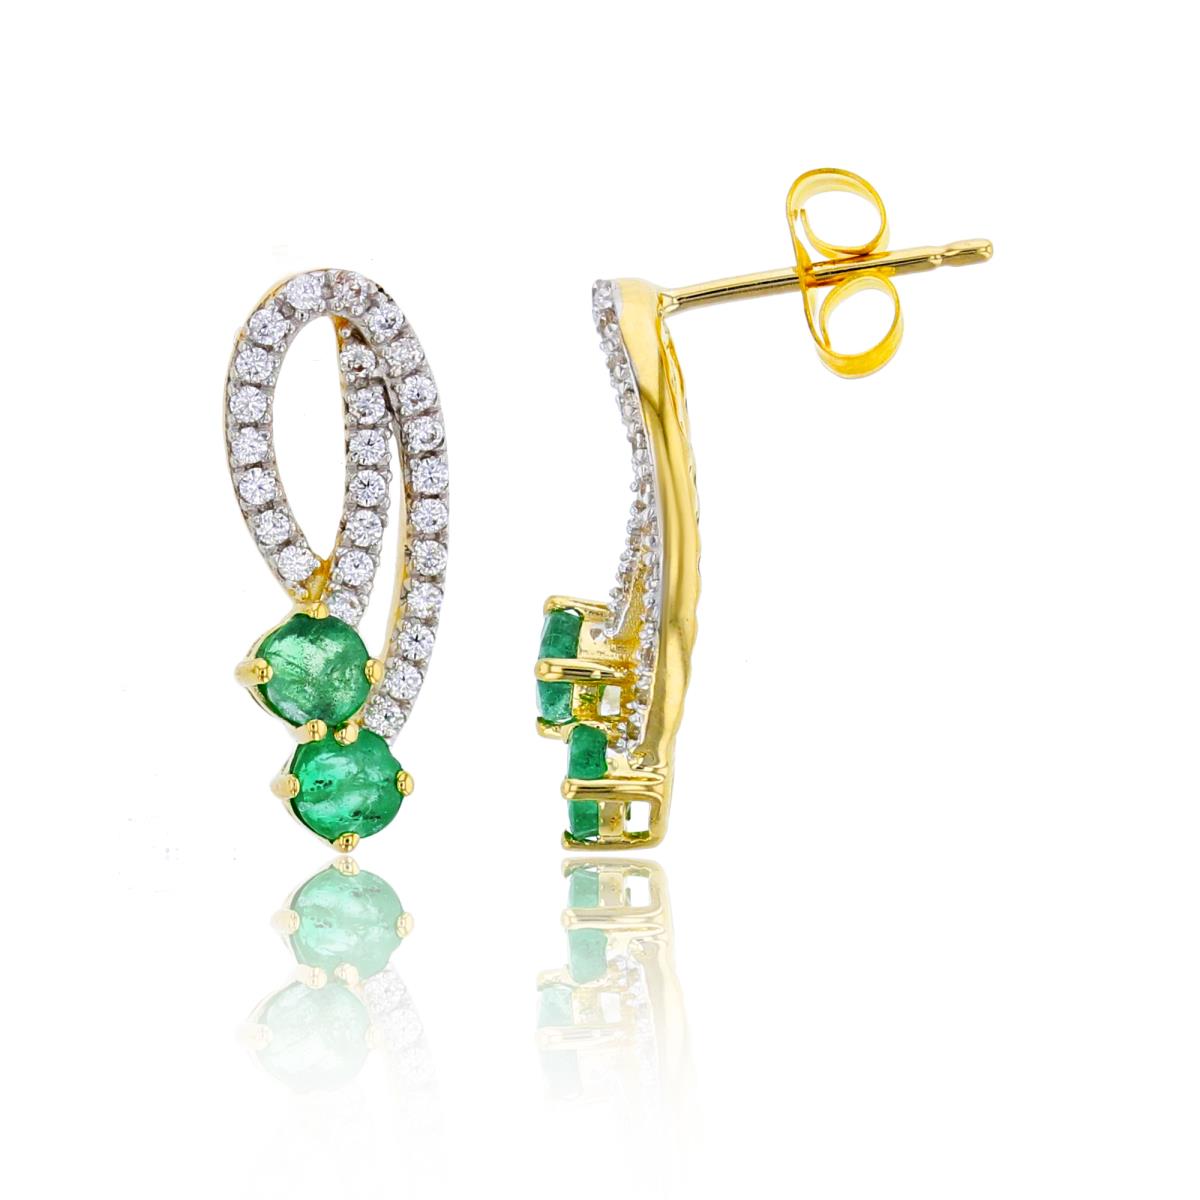 14K Yellow Gold 0.32cttw Rnd Diamonds & 3mm Rnd Emerald Fashion Earrings